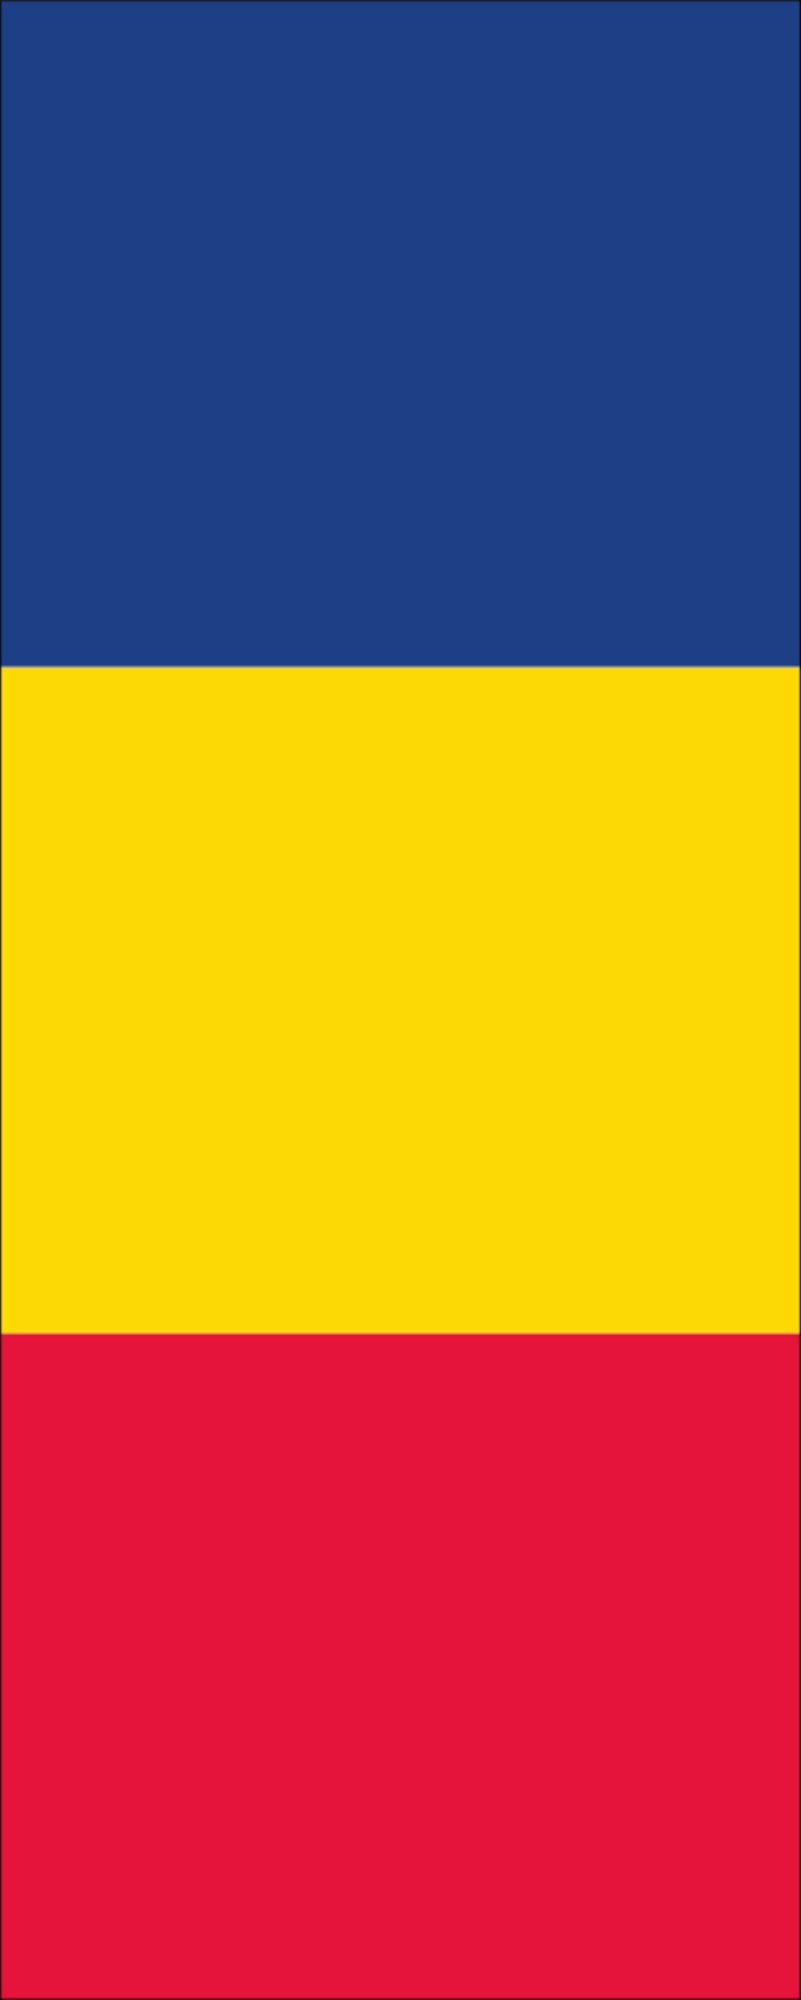 Flagge Rumänien